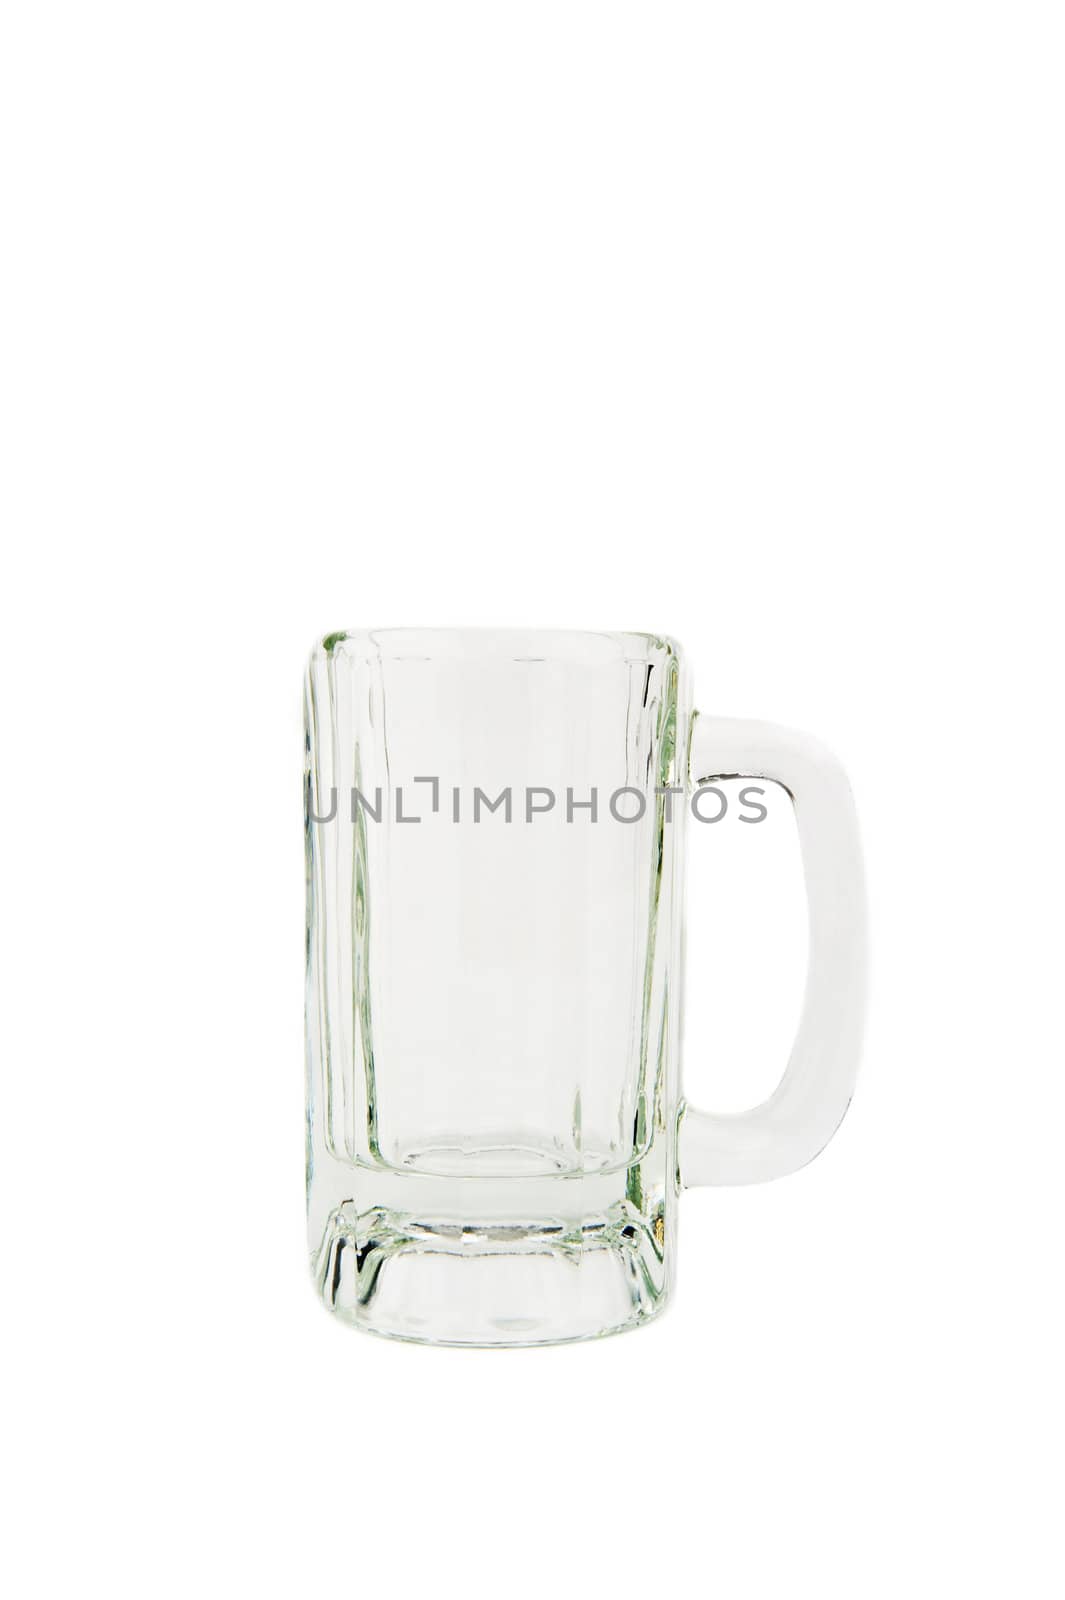 Image of an empty glass mug on white background